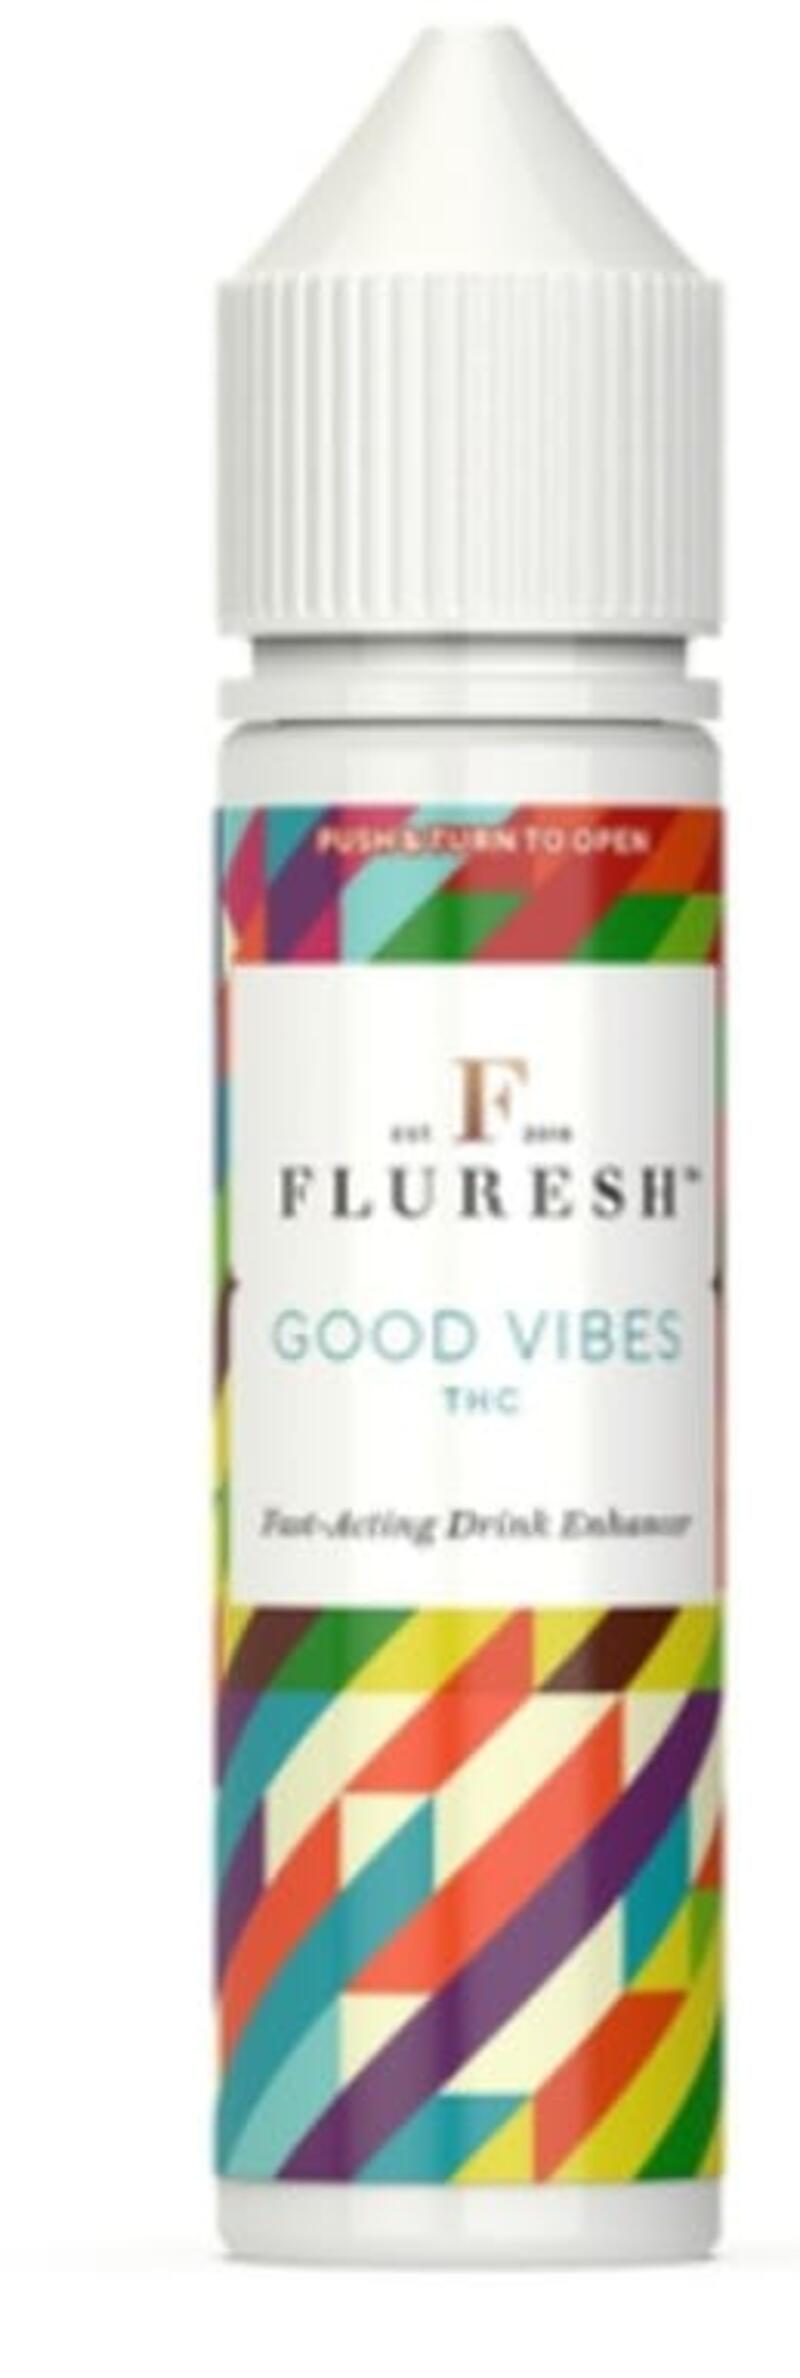 Fluresh: Drink Enhancer Good Vibes 200mg